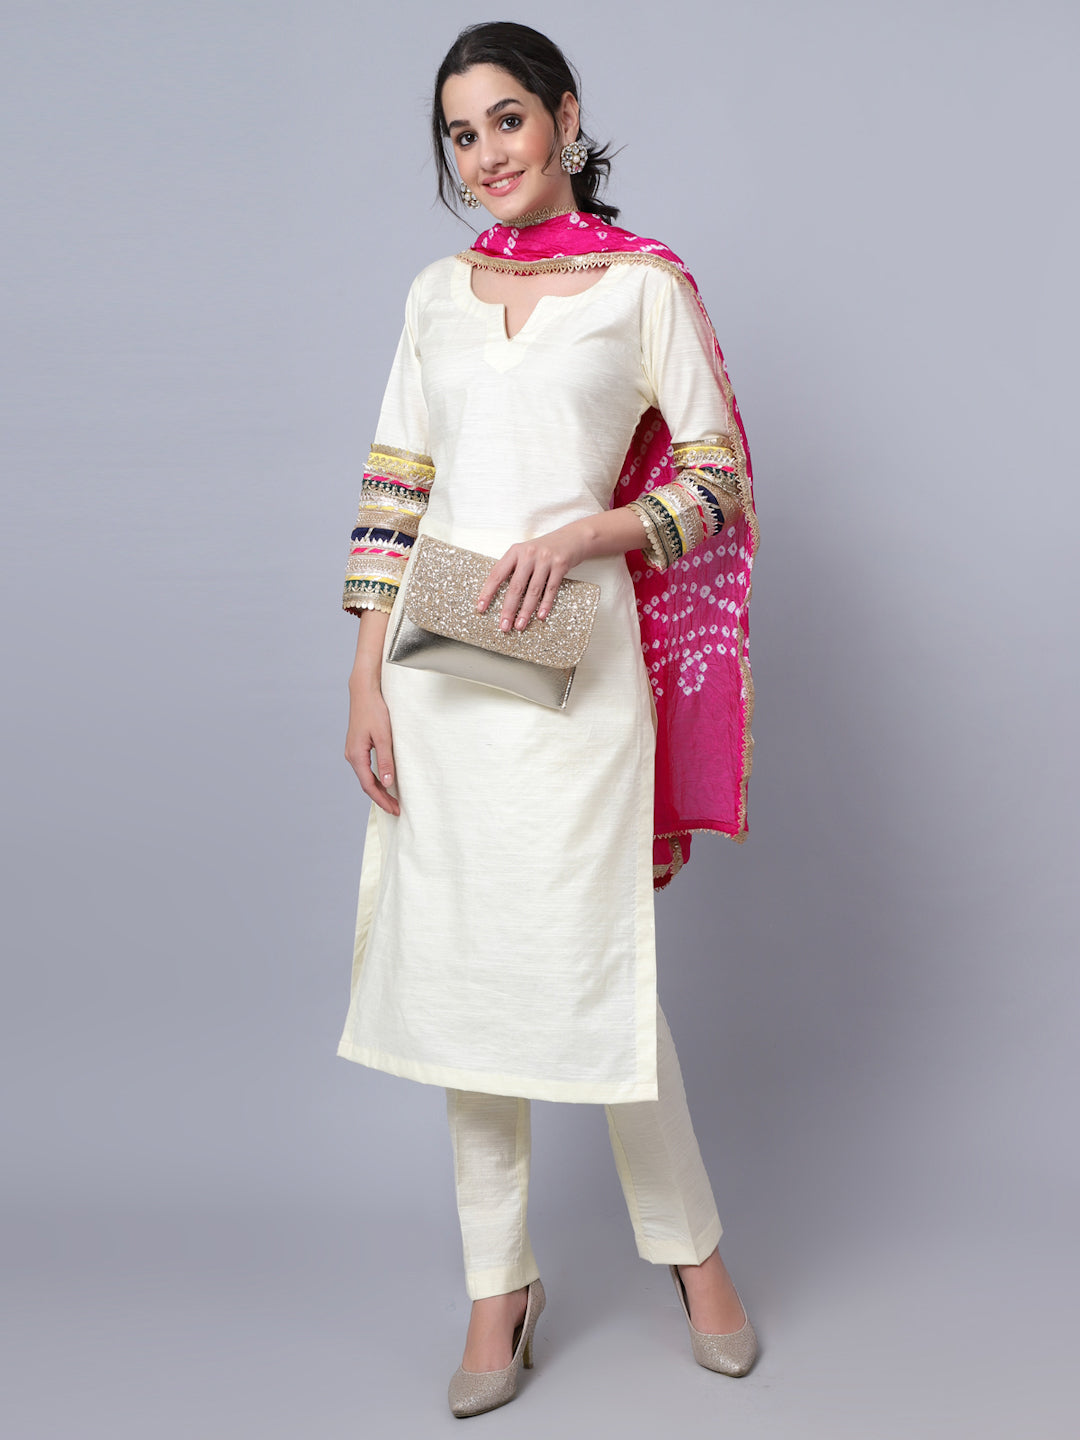 Off White Designer Kurtis Online Shopping for Women at Low Prices